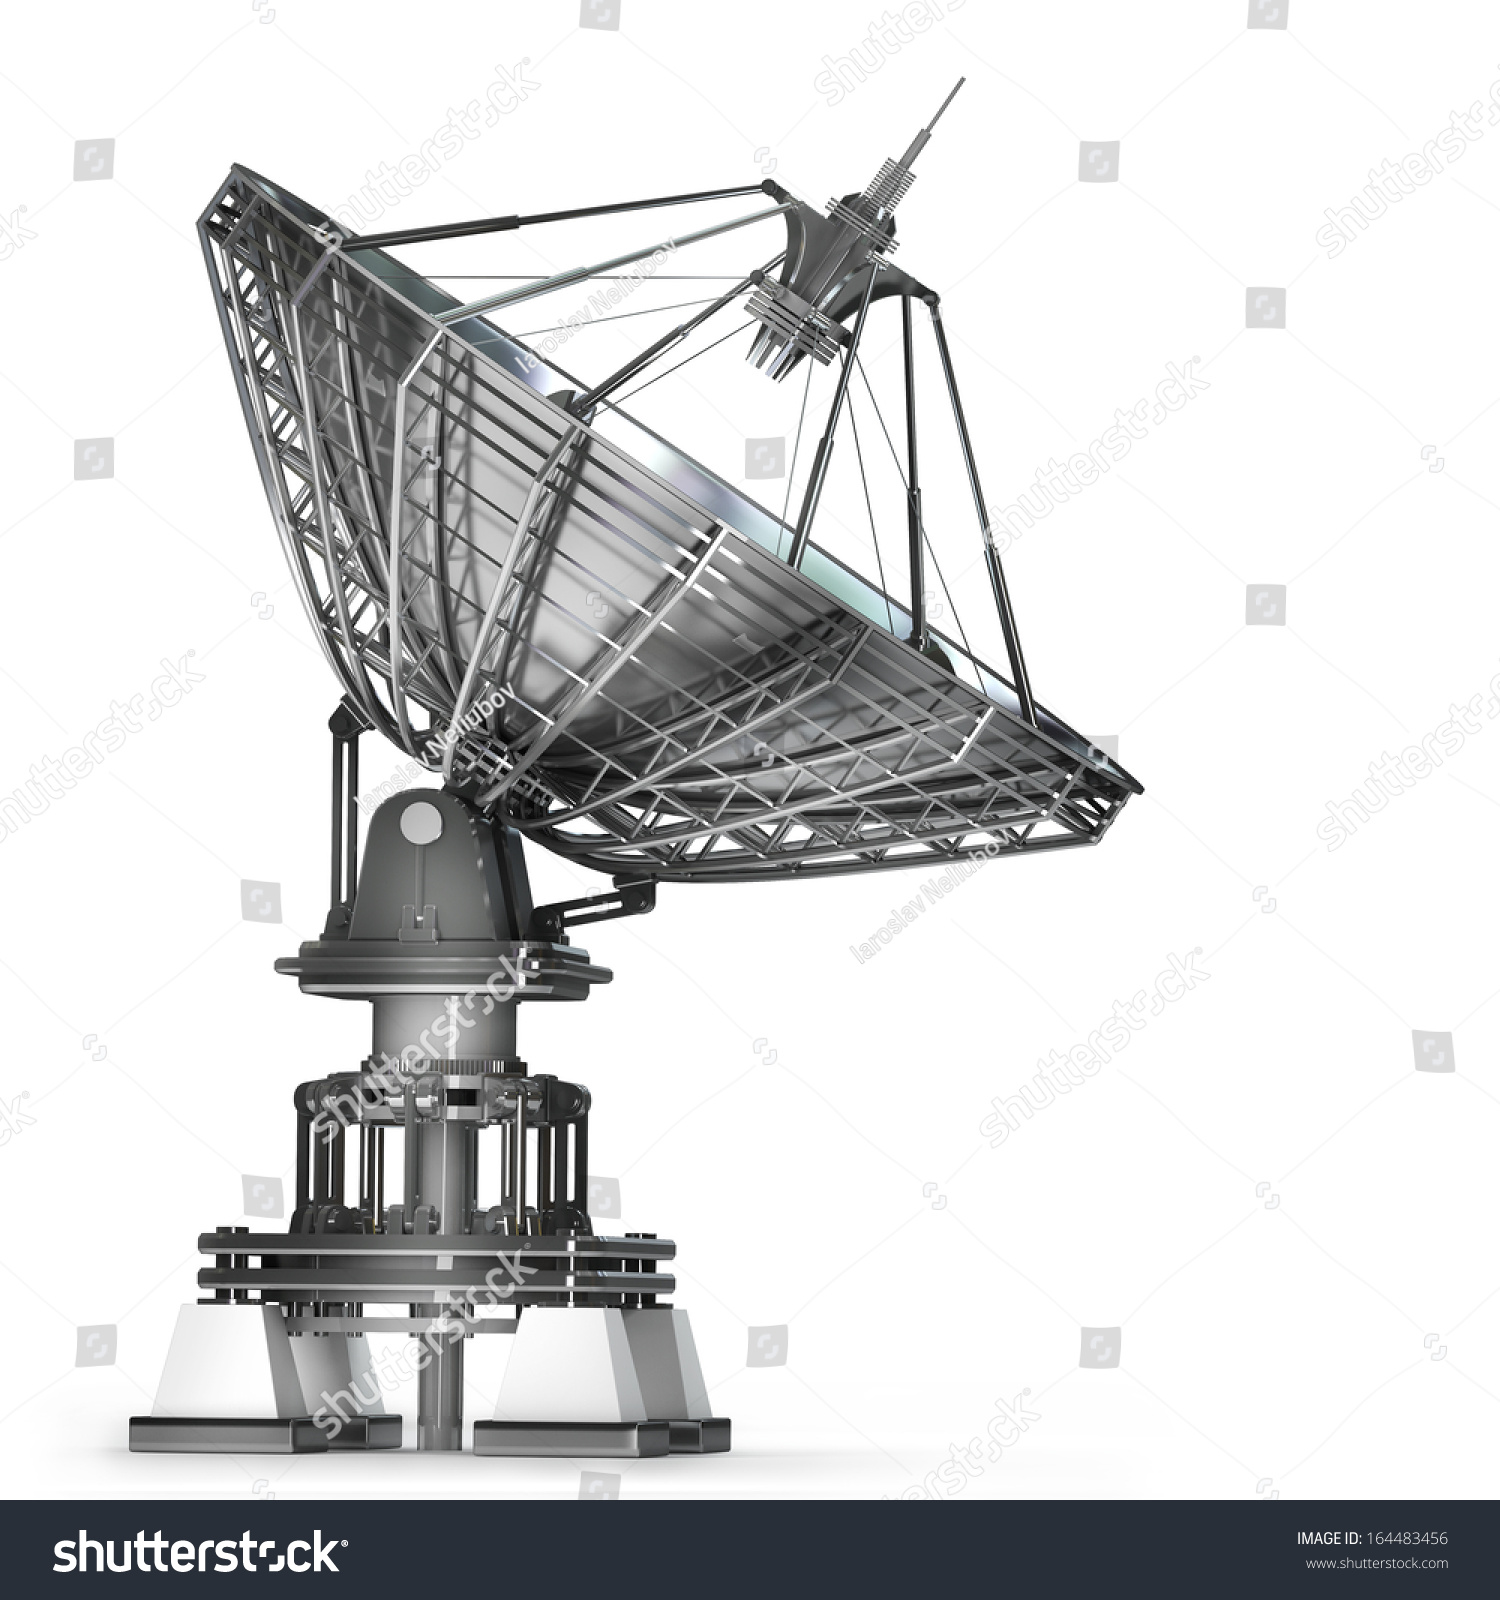 Satellite dishes antenna - Doppler radar  isolated on white background High resolution 3d  #164483456